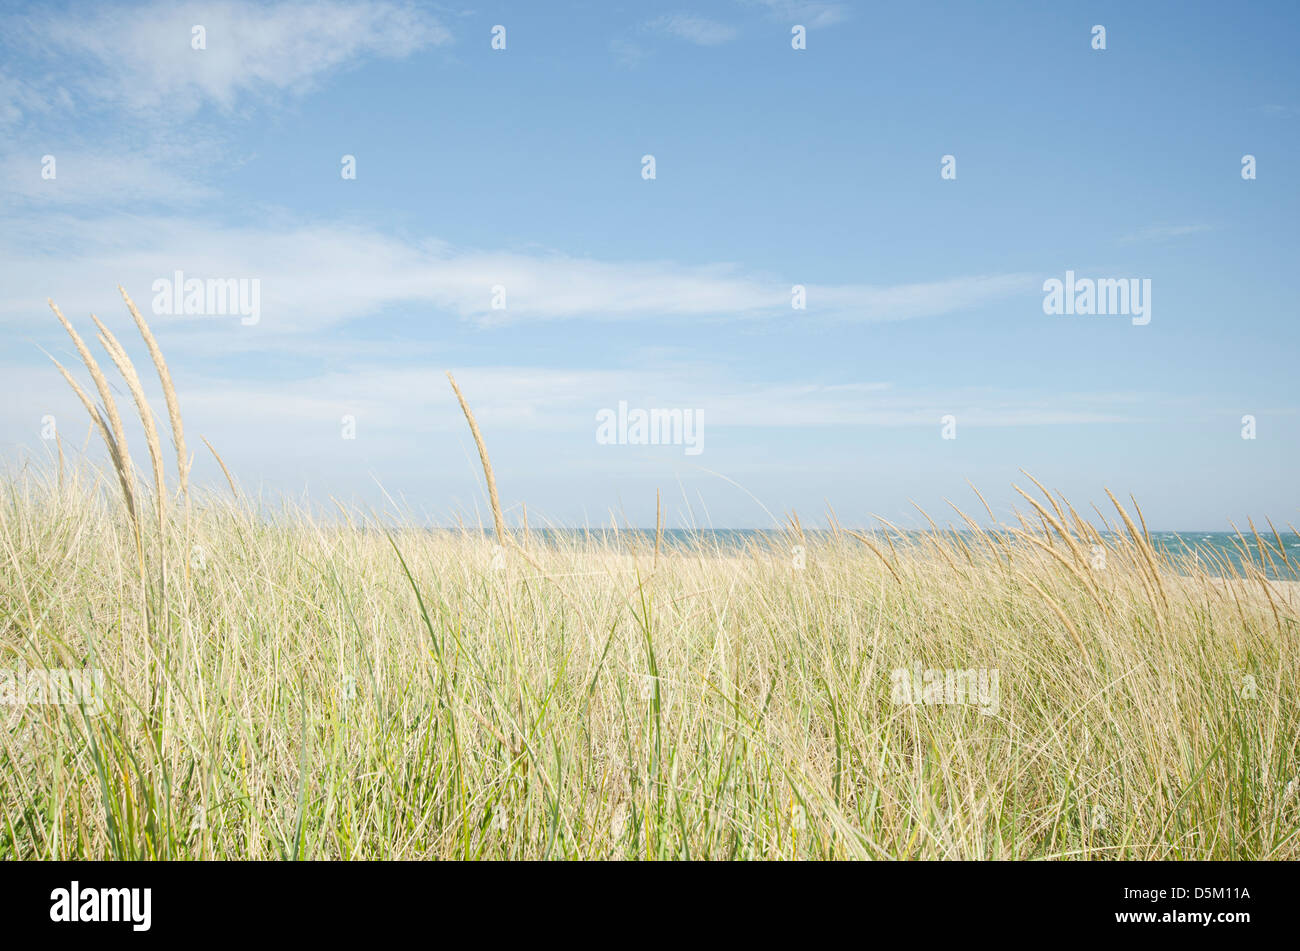 USA, Massachusetts, Nantucket, Sand dunes with grass Stock Photo